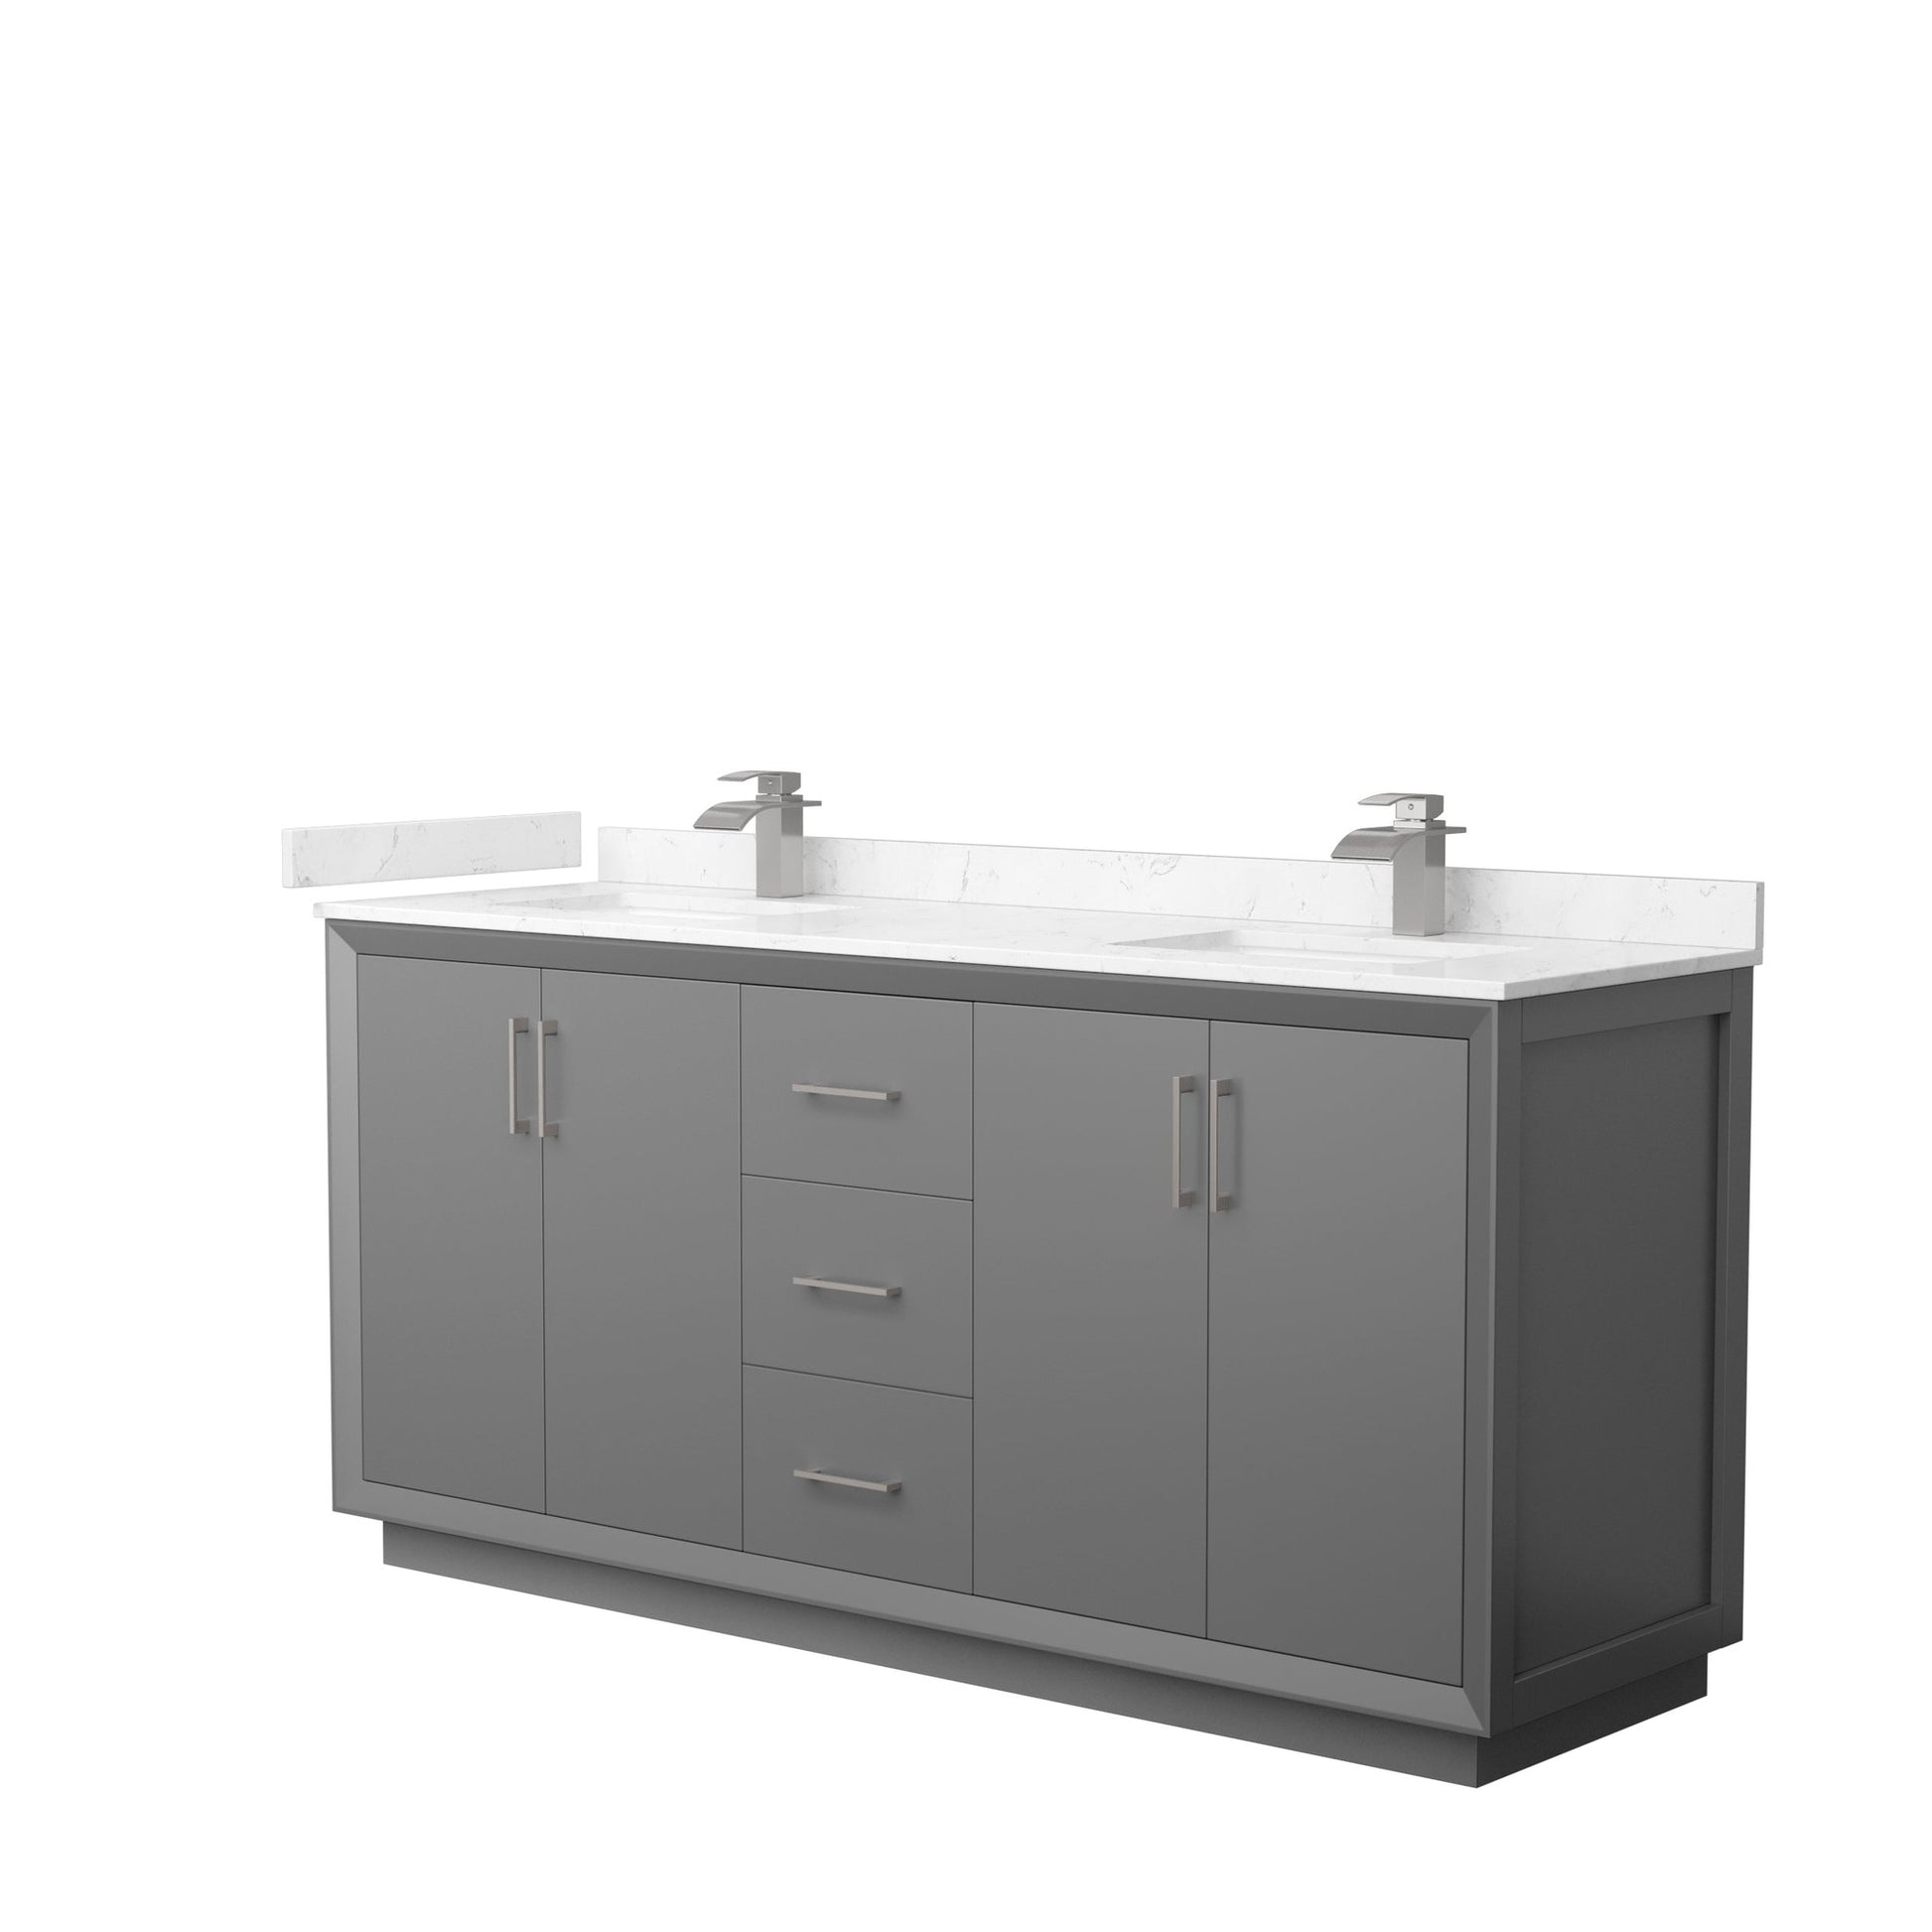 Wyndham Collection Strada 72" Double Bathroom Vanity in Dark Gray, Carrara Cultured Marble Countertop, Undermount Square Sink, Brushed Nickel Trim